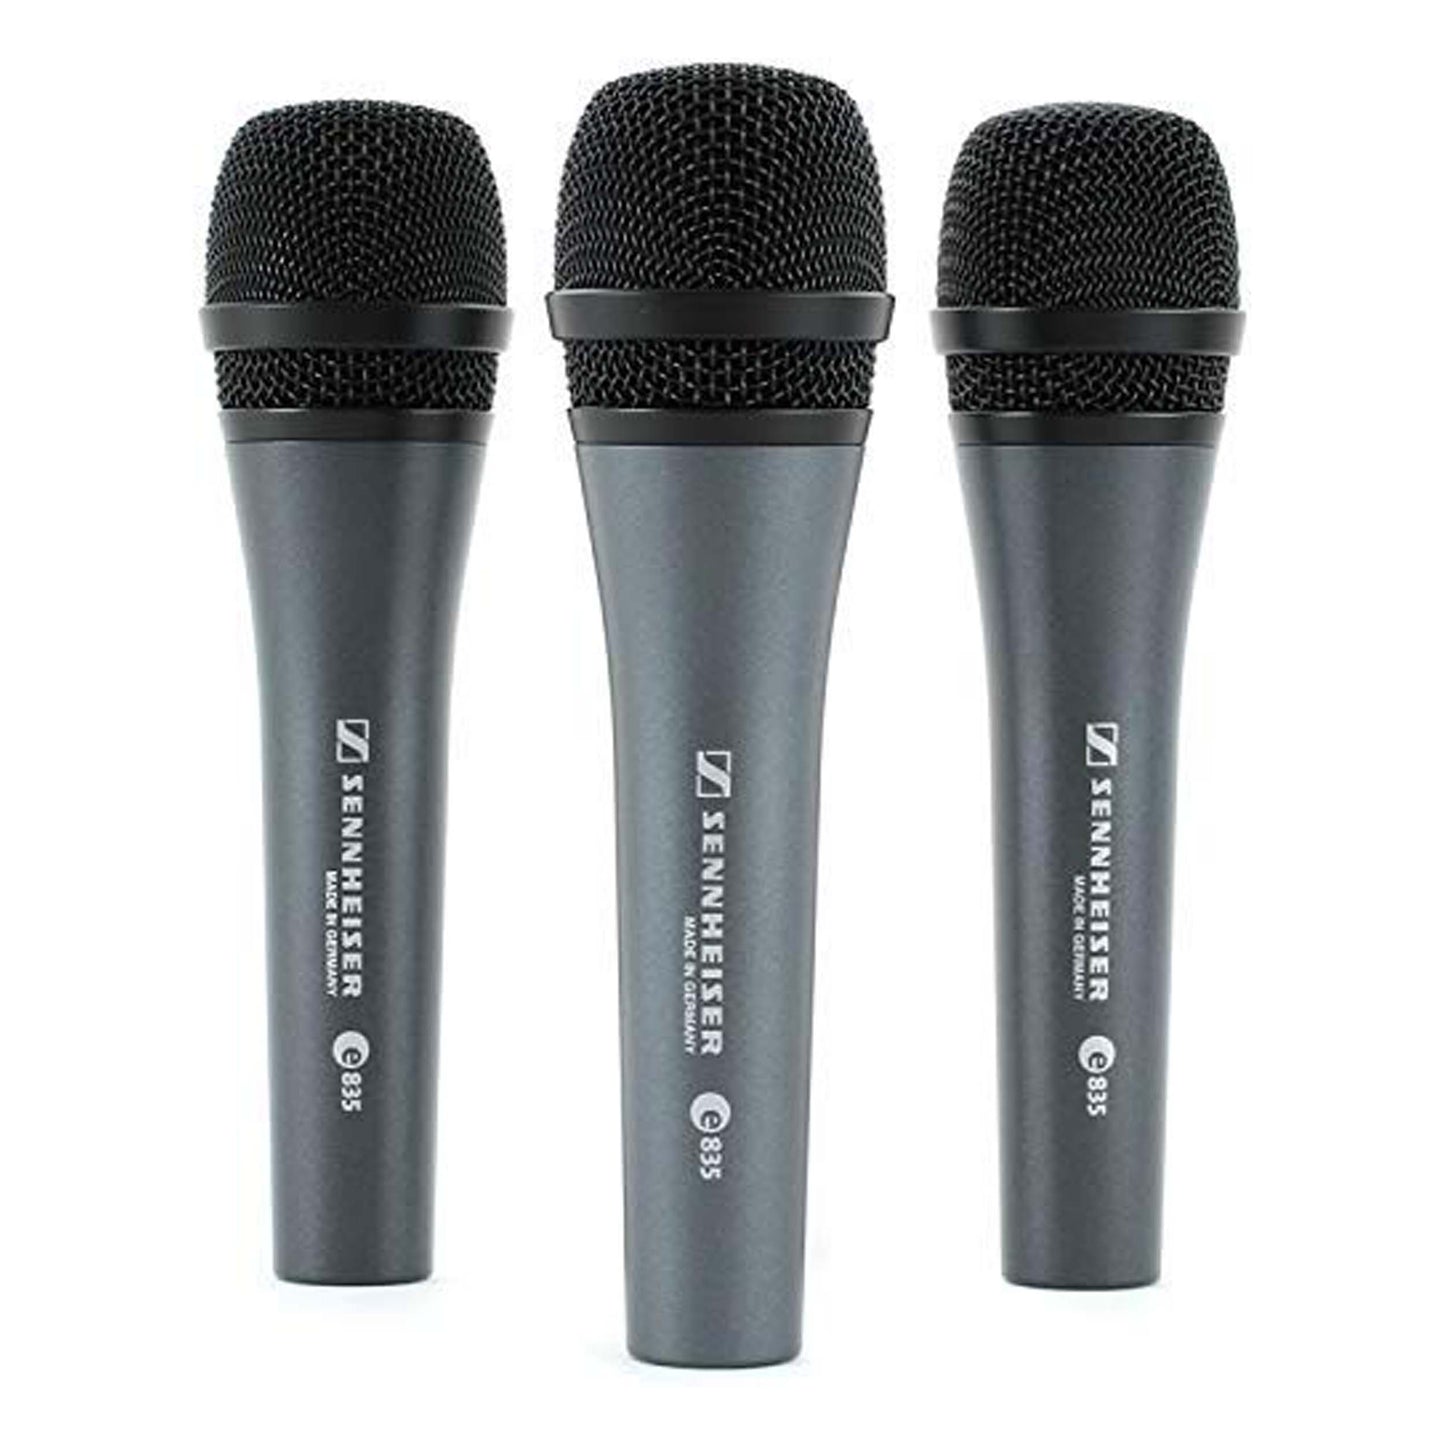 Sennheiser e835 Microphone, Pack of 3